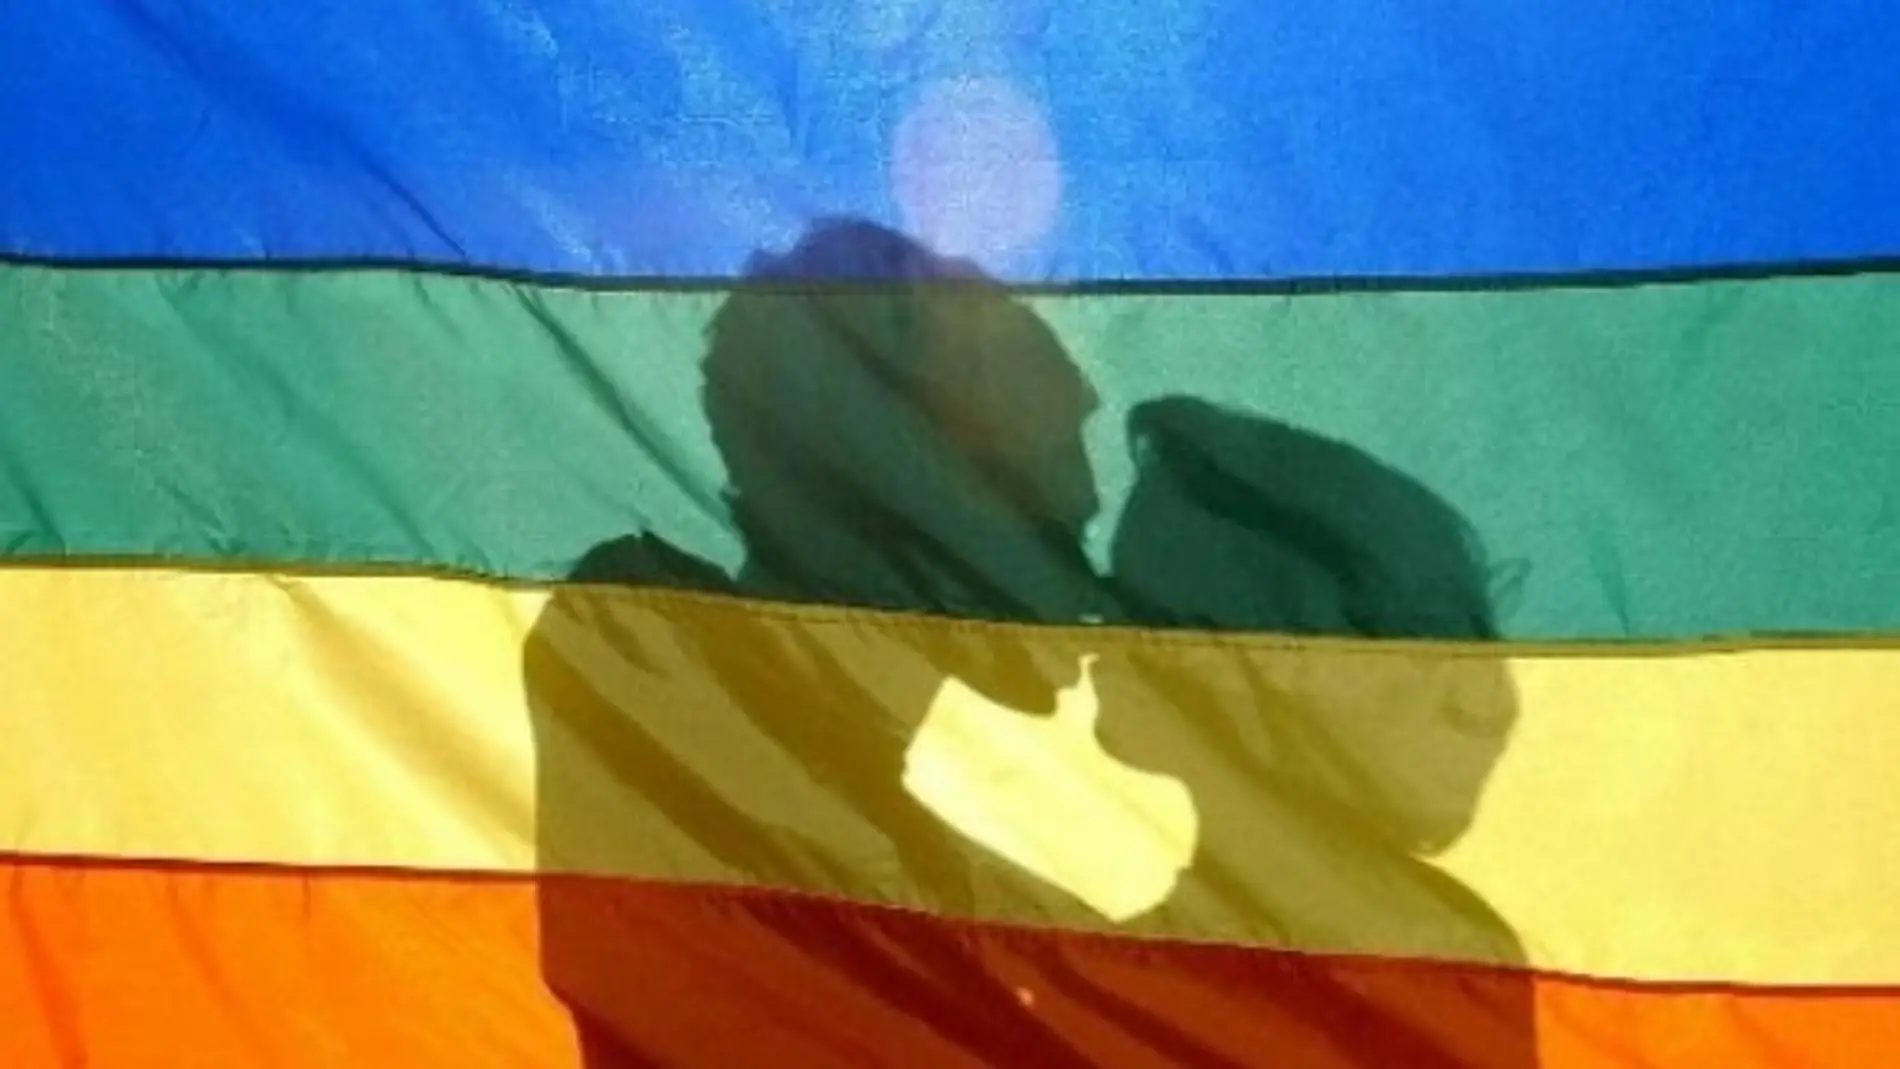 Dos jóvenes se besan tras la bandera LGTB